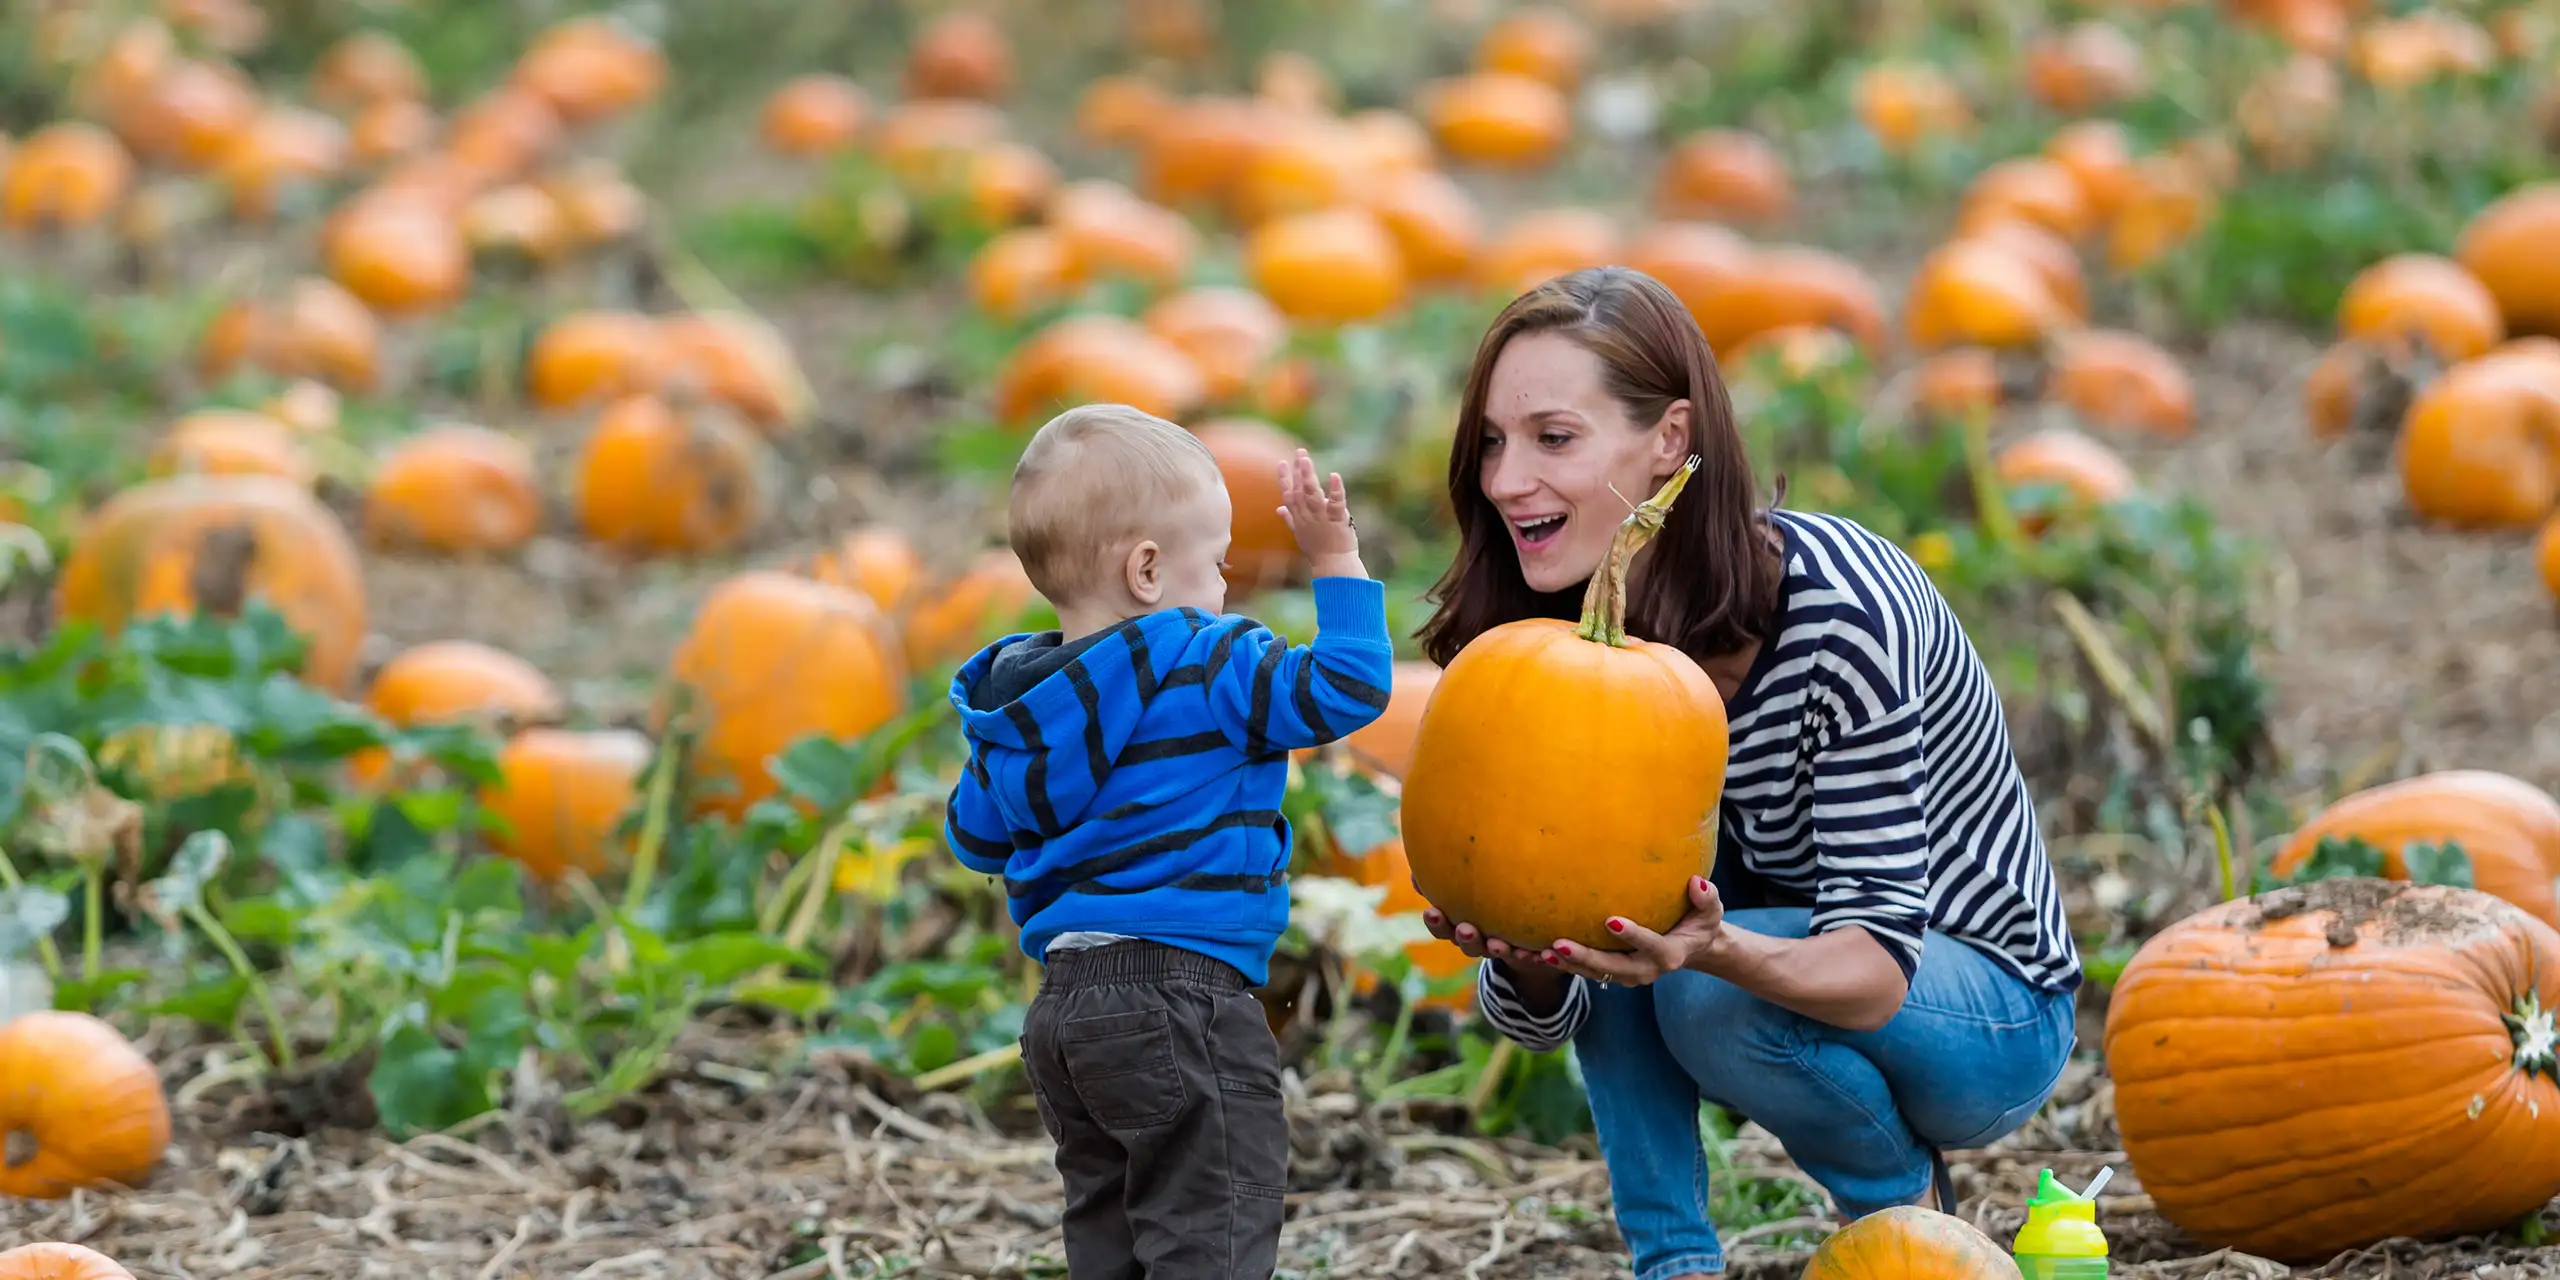 Choosing a pumpkin at a pumpkin patch on Fall day. ; Courtesy of Arina P Habich /Shutterstock